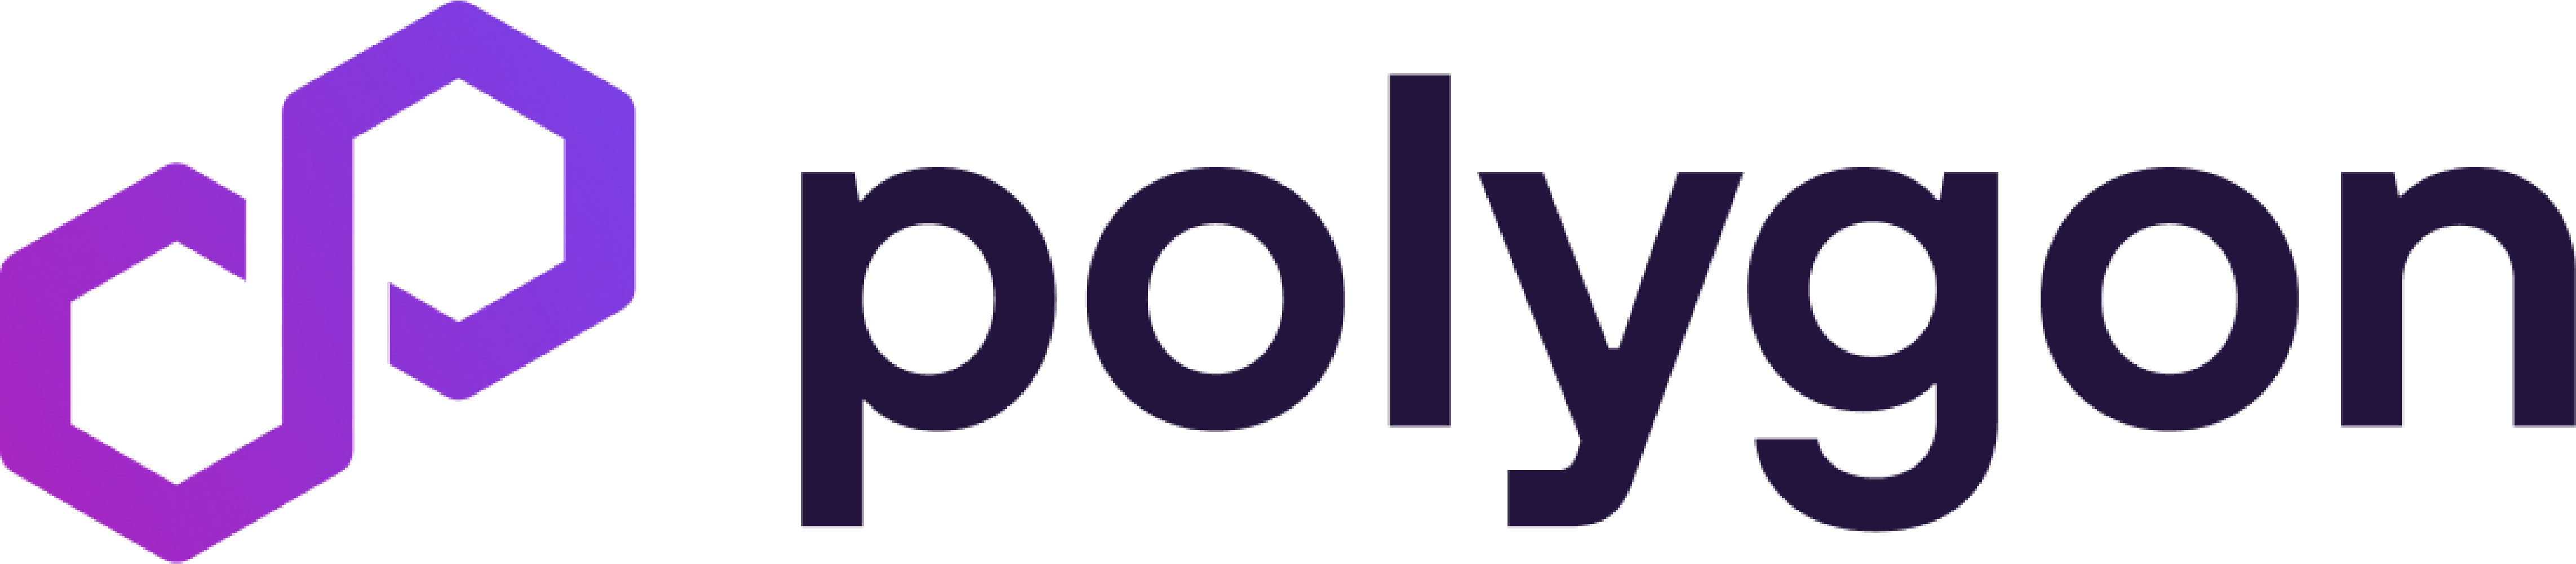 Polygon-logo